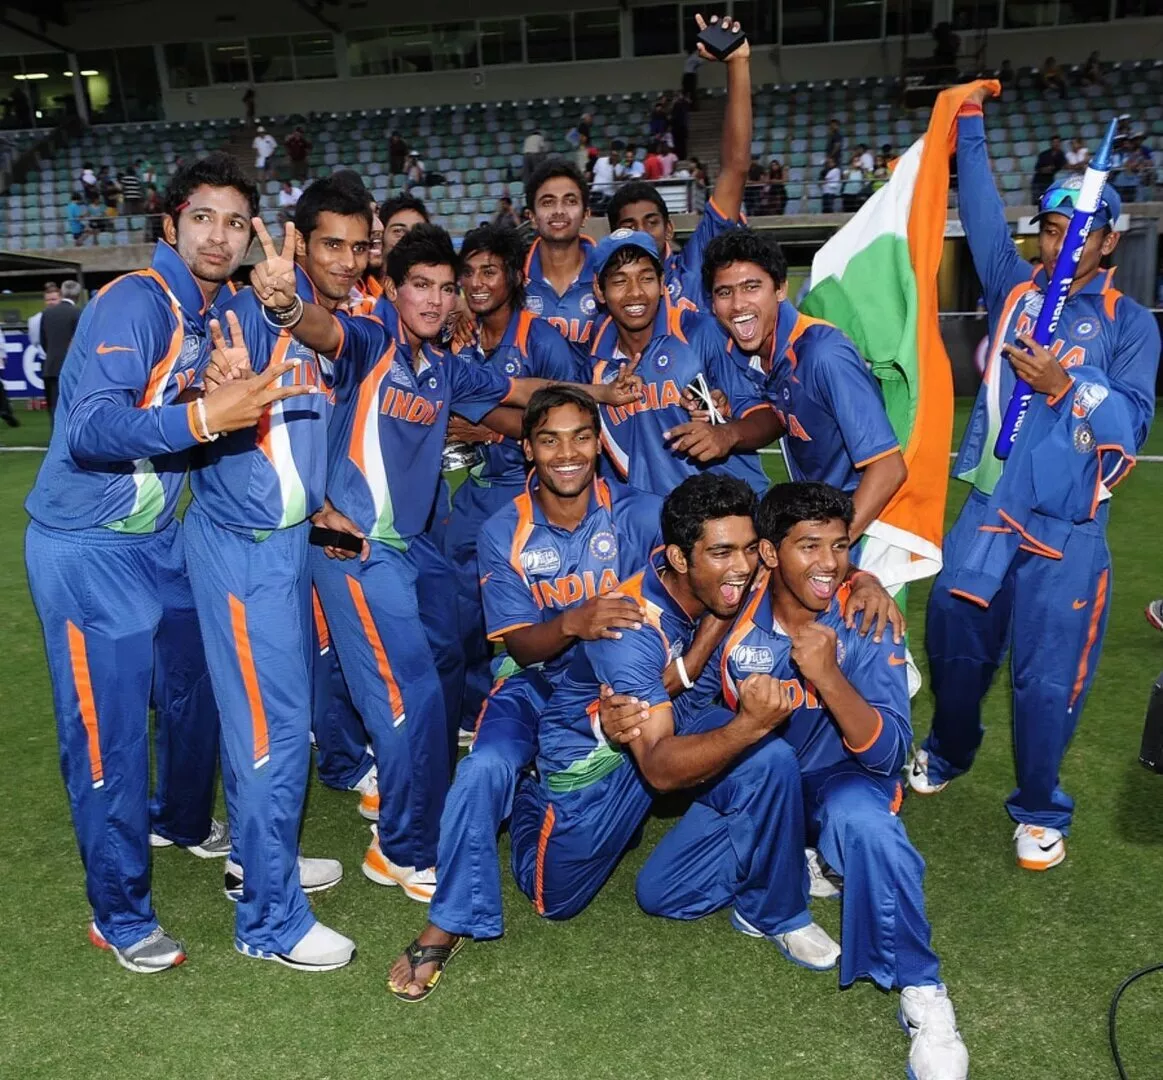 2012 U19 India team